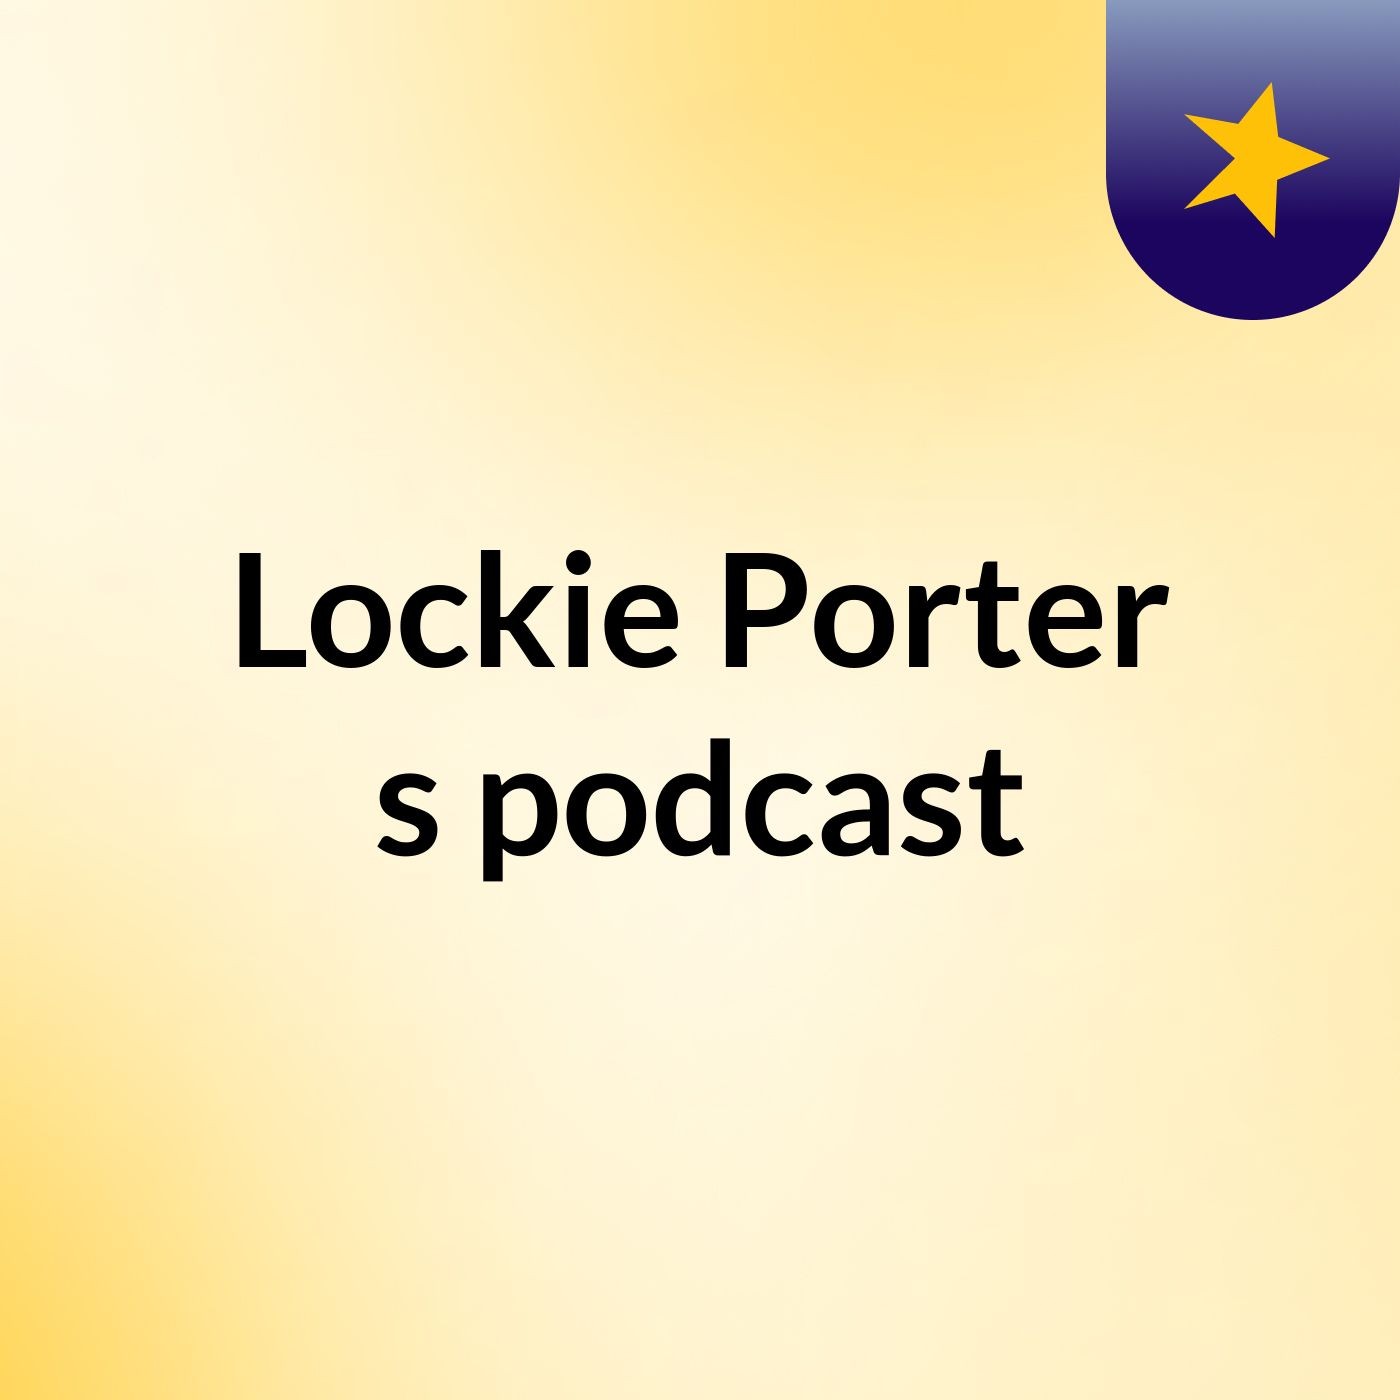 Episode 3 - Lockie Porter's podcast